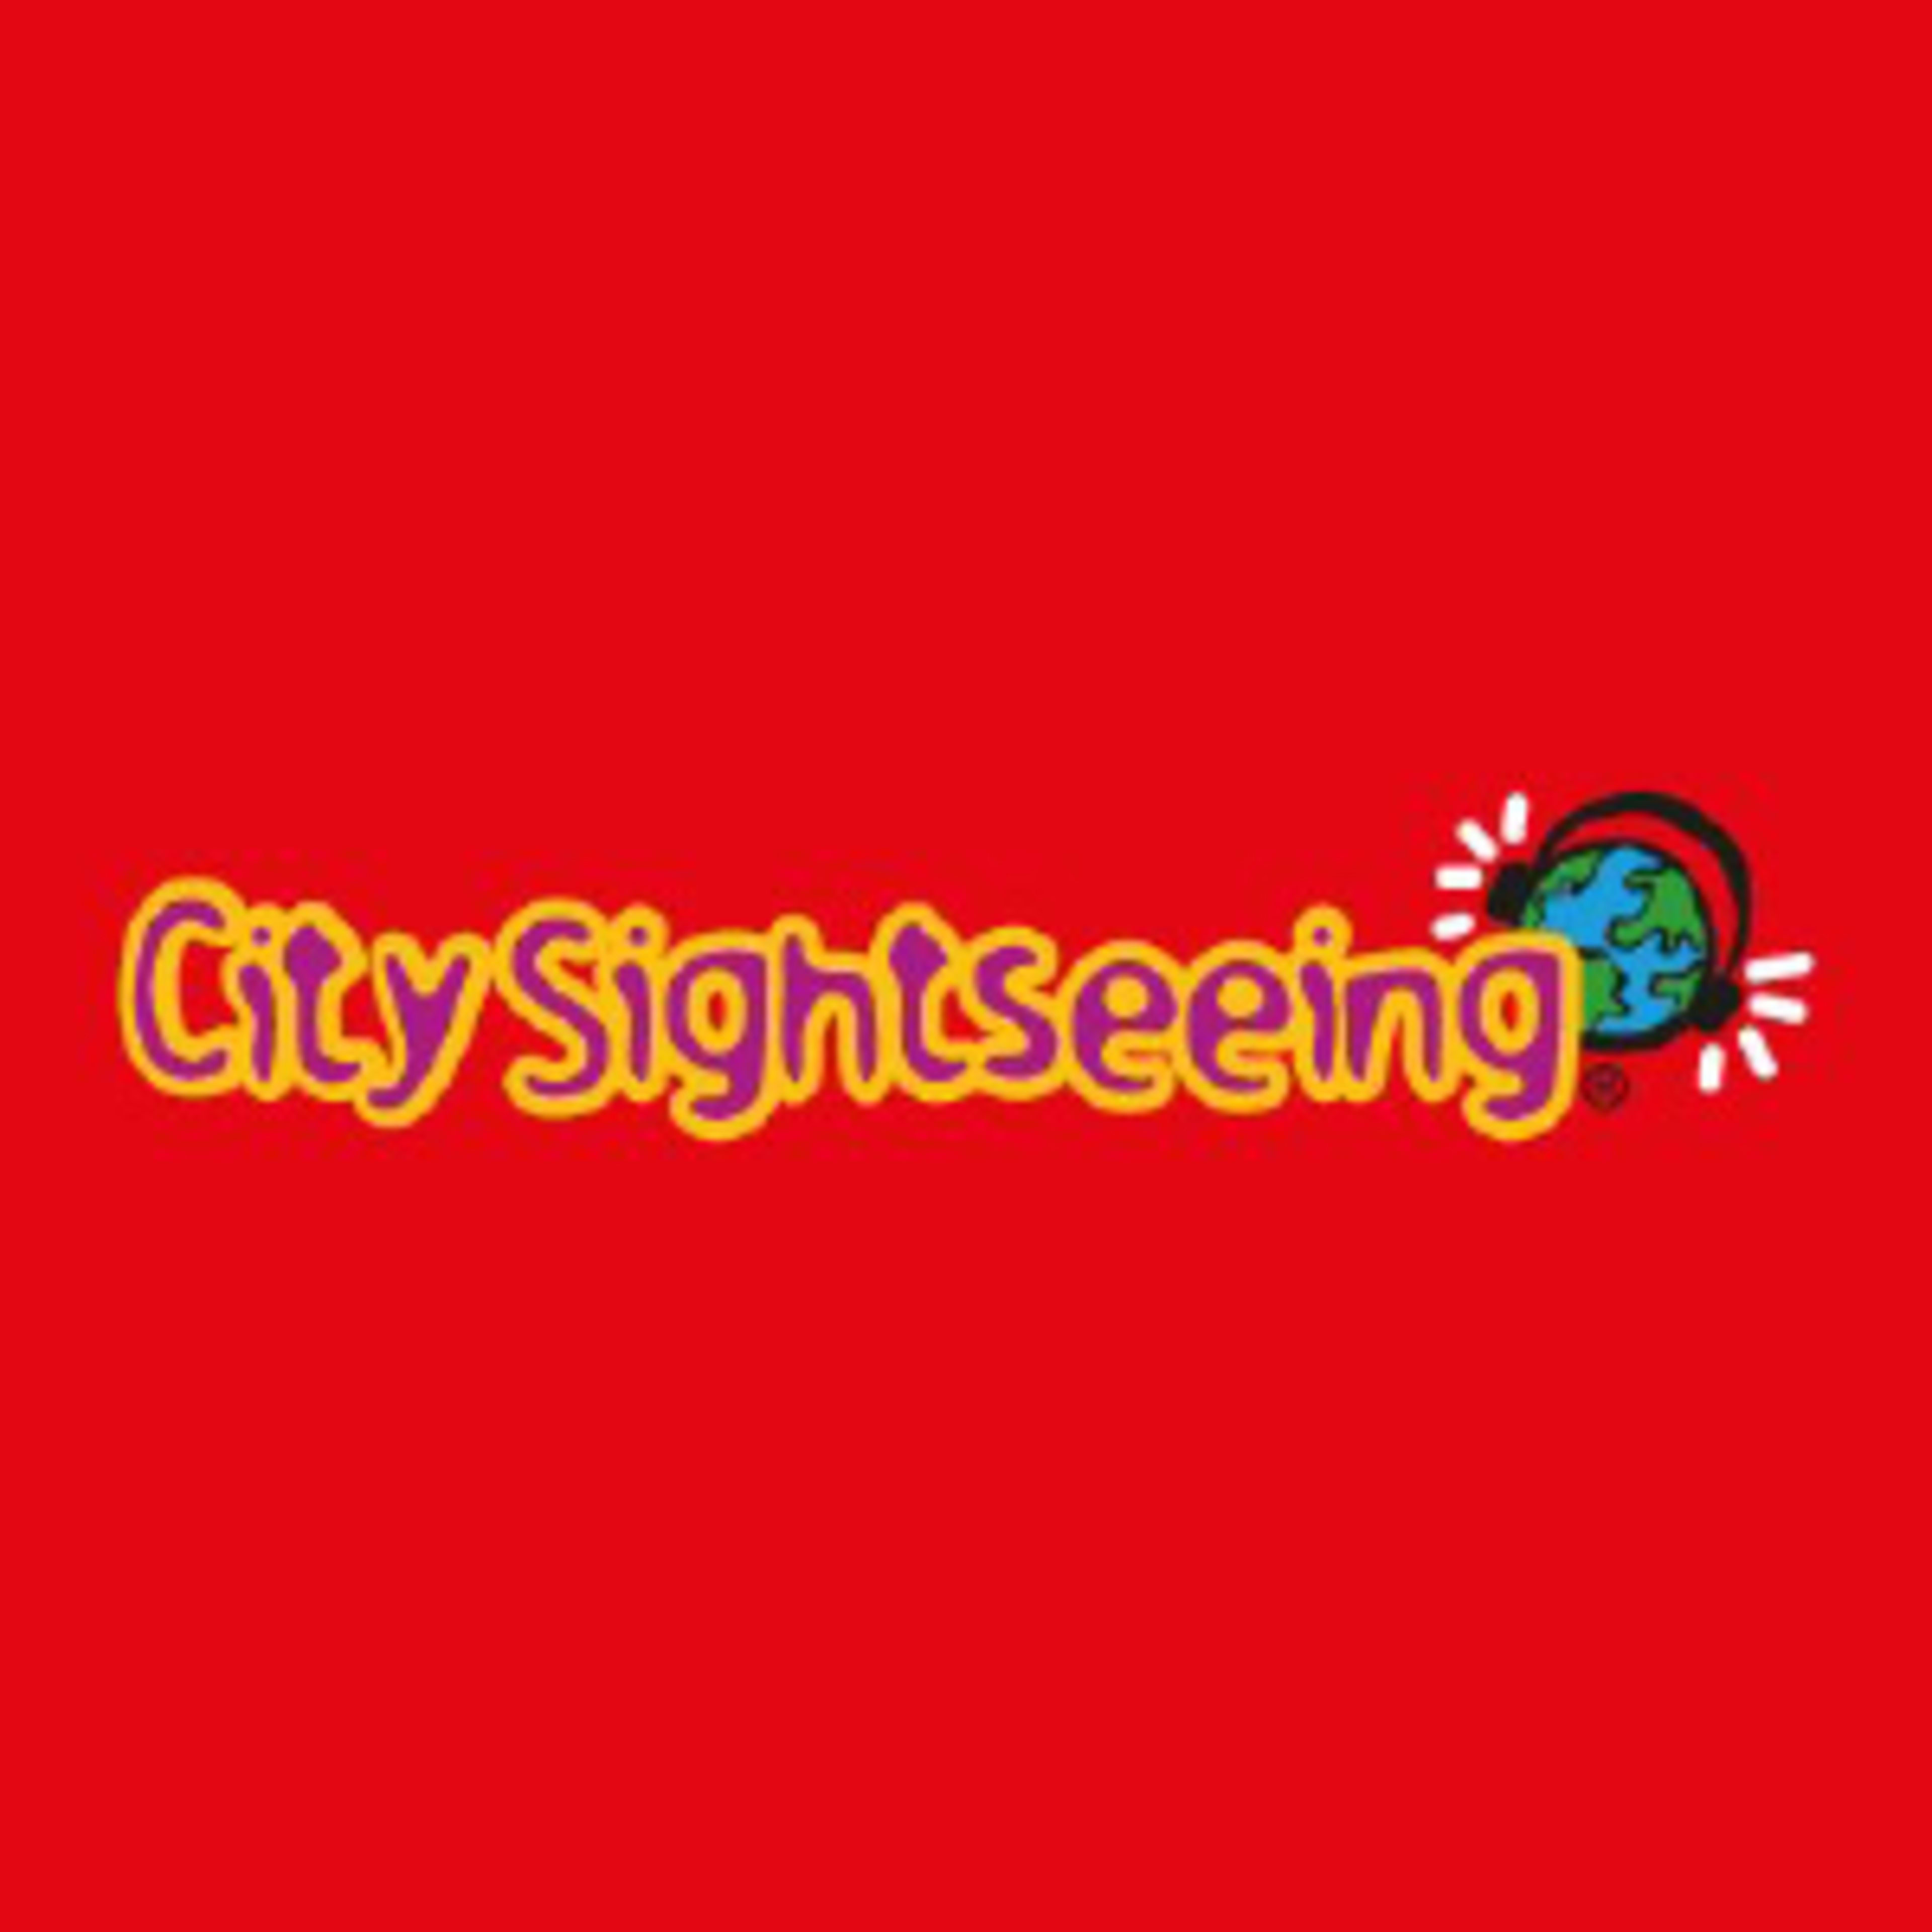 City Sightseeing.comCode